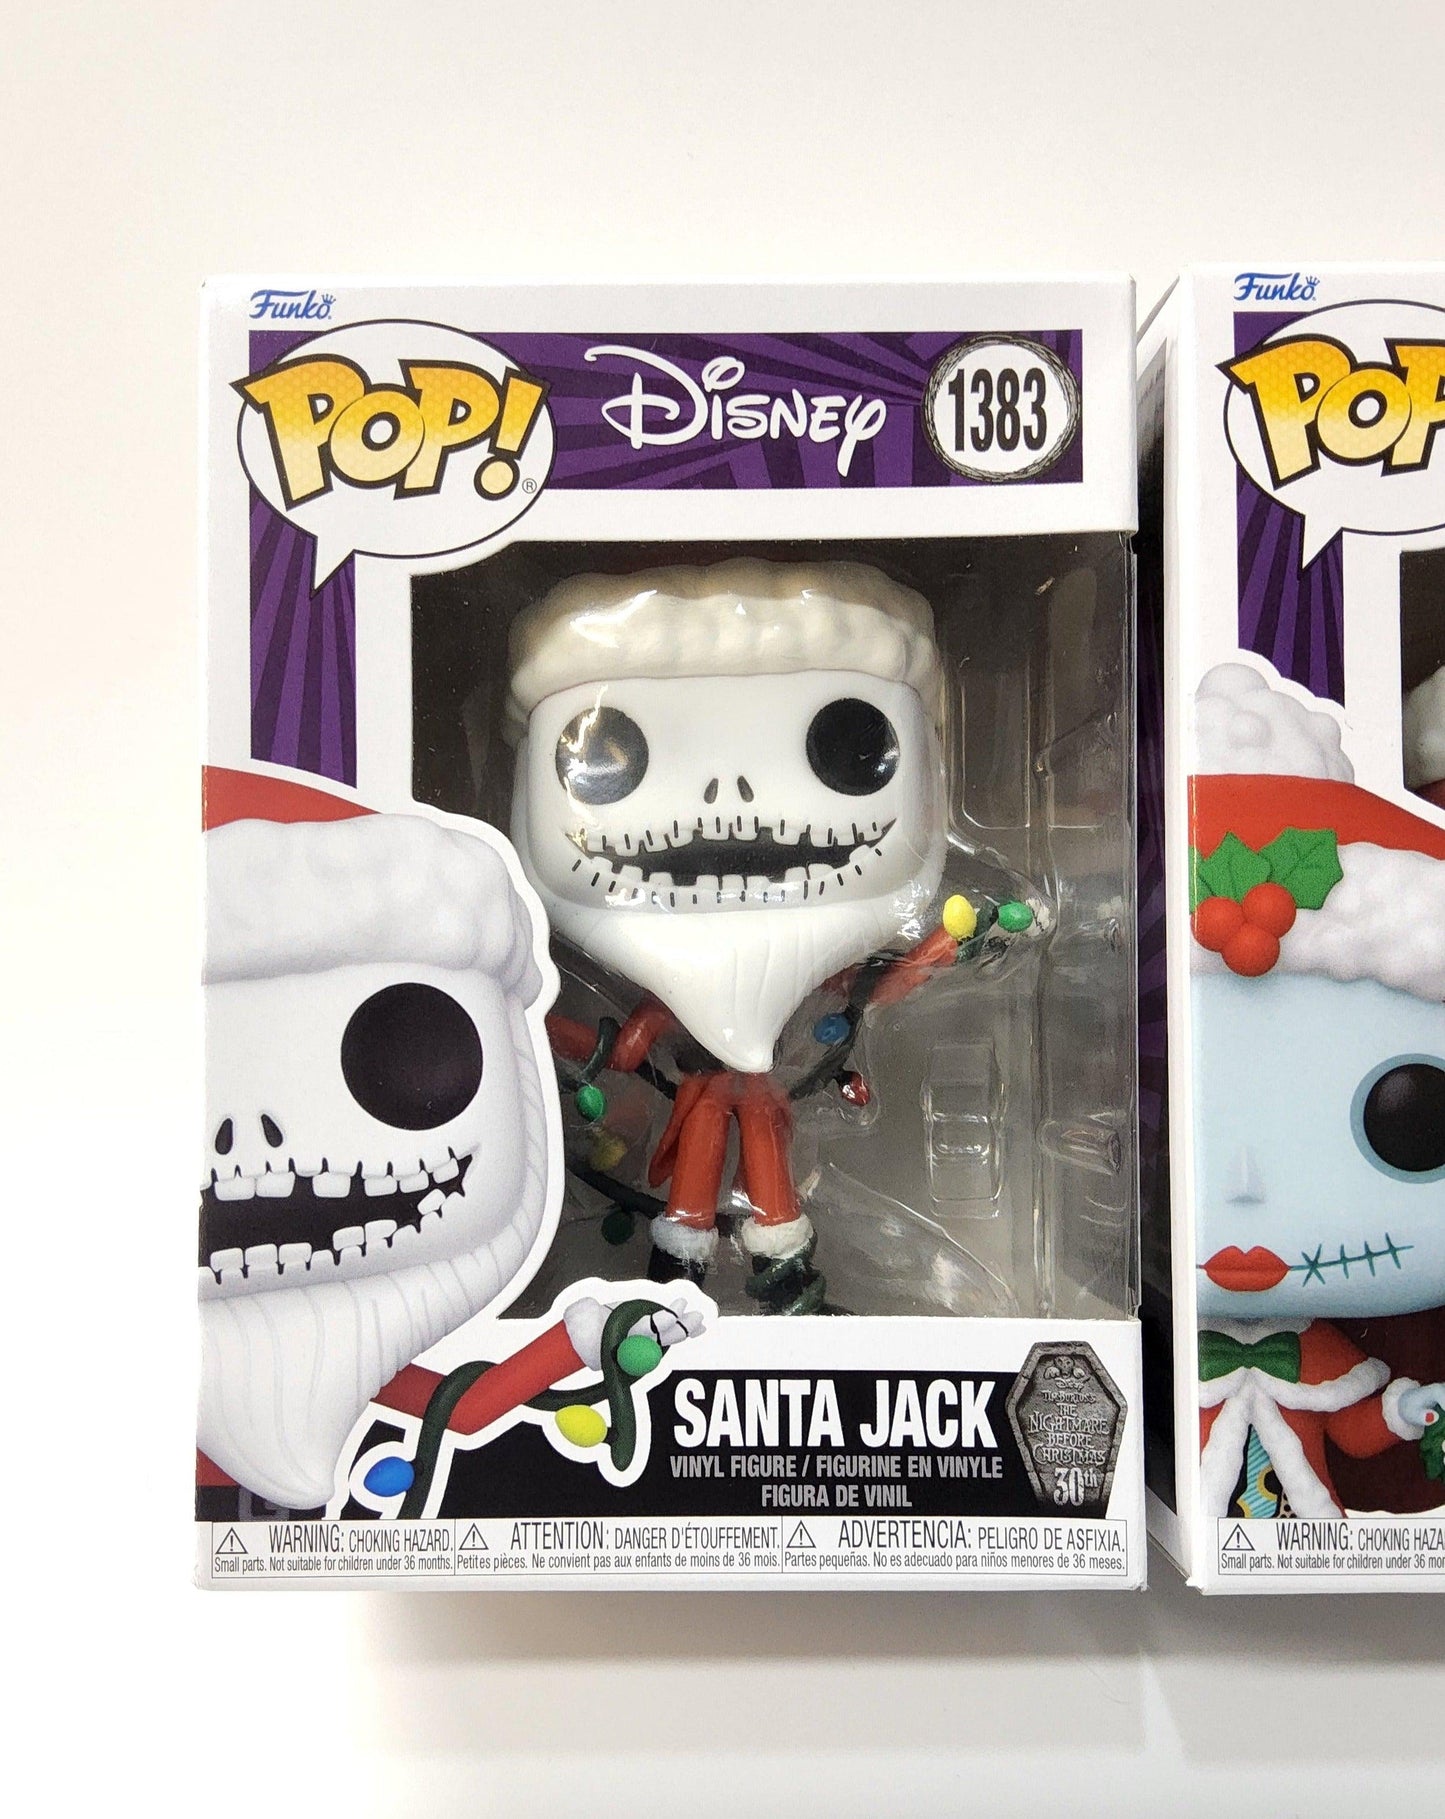 Funko Pop! Disney NBC Santa Jack Skellington Christmas Sally Bundle - Logan's Toy Chest